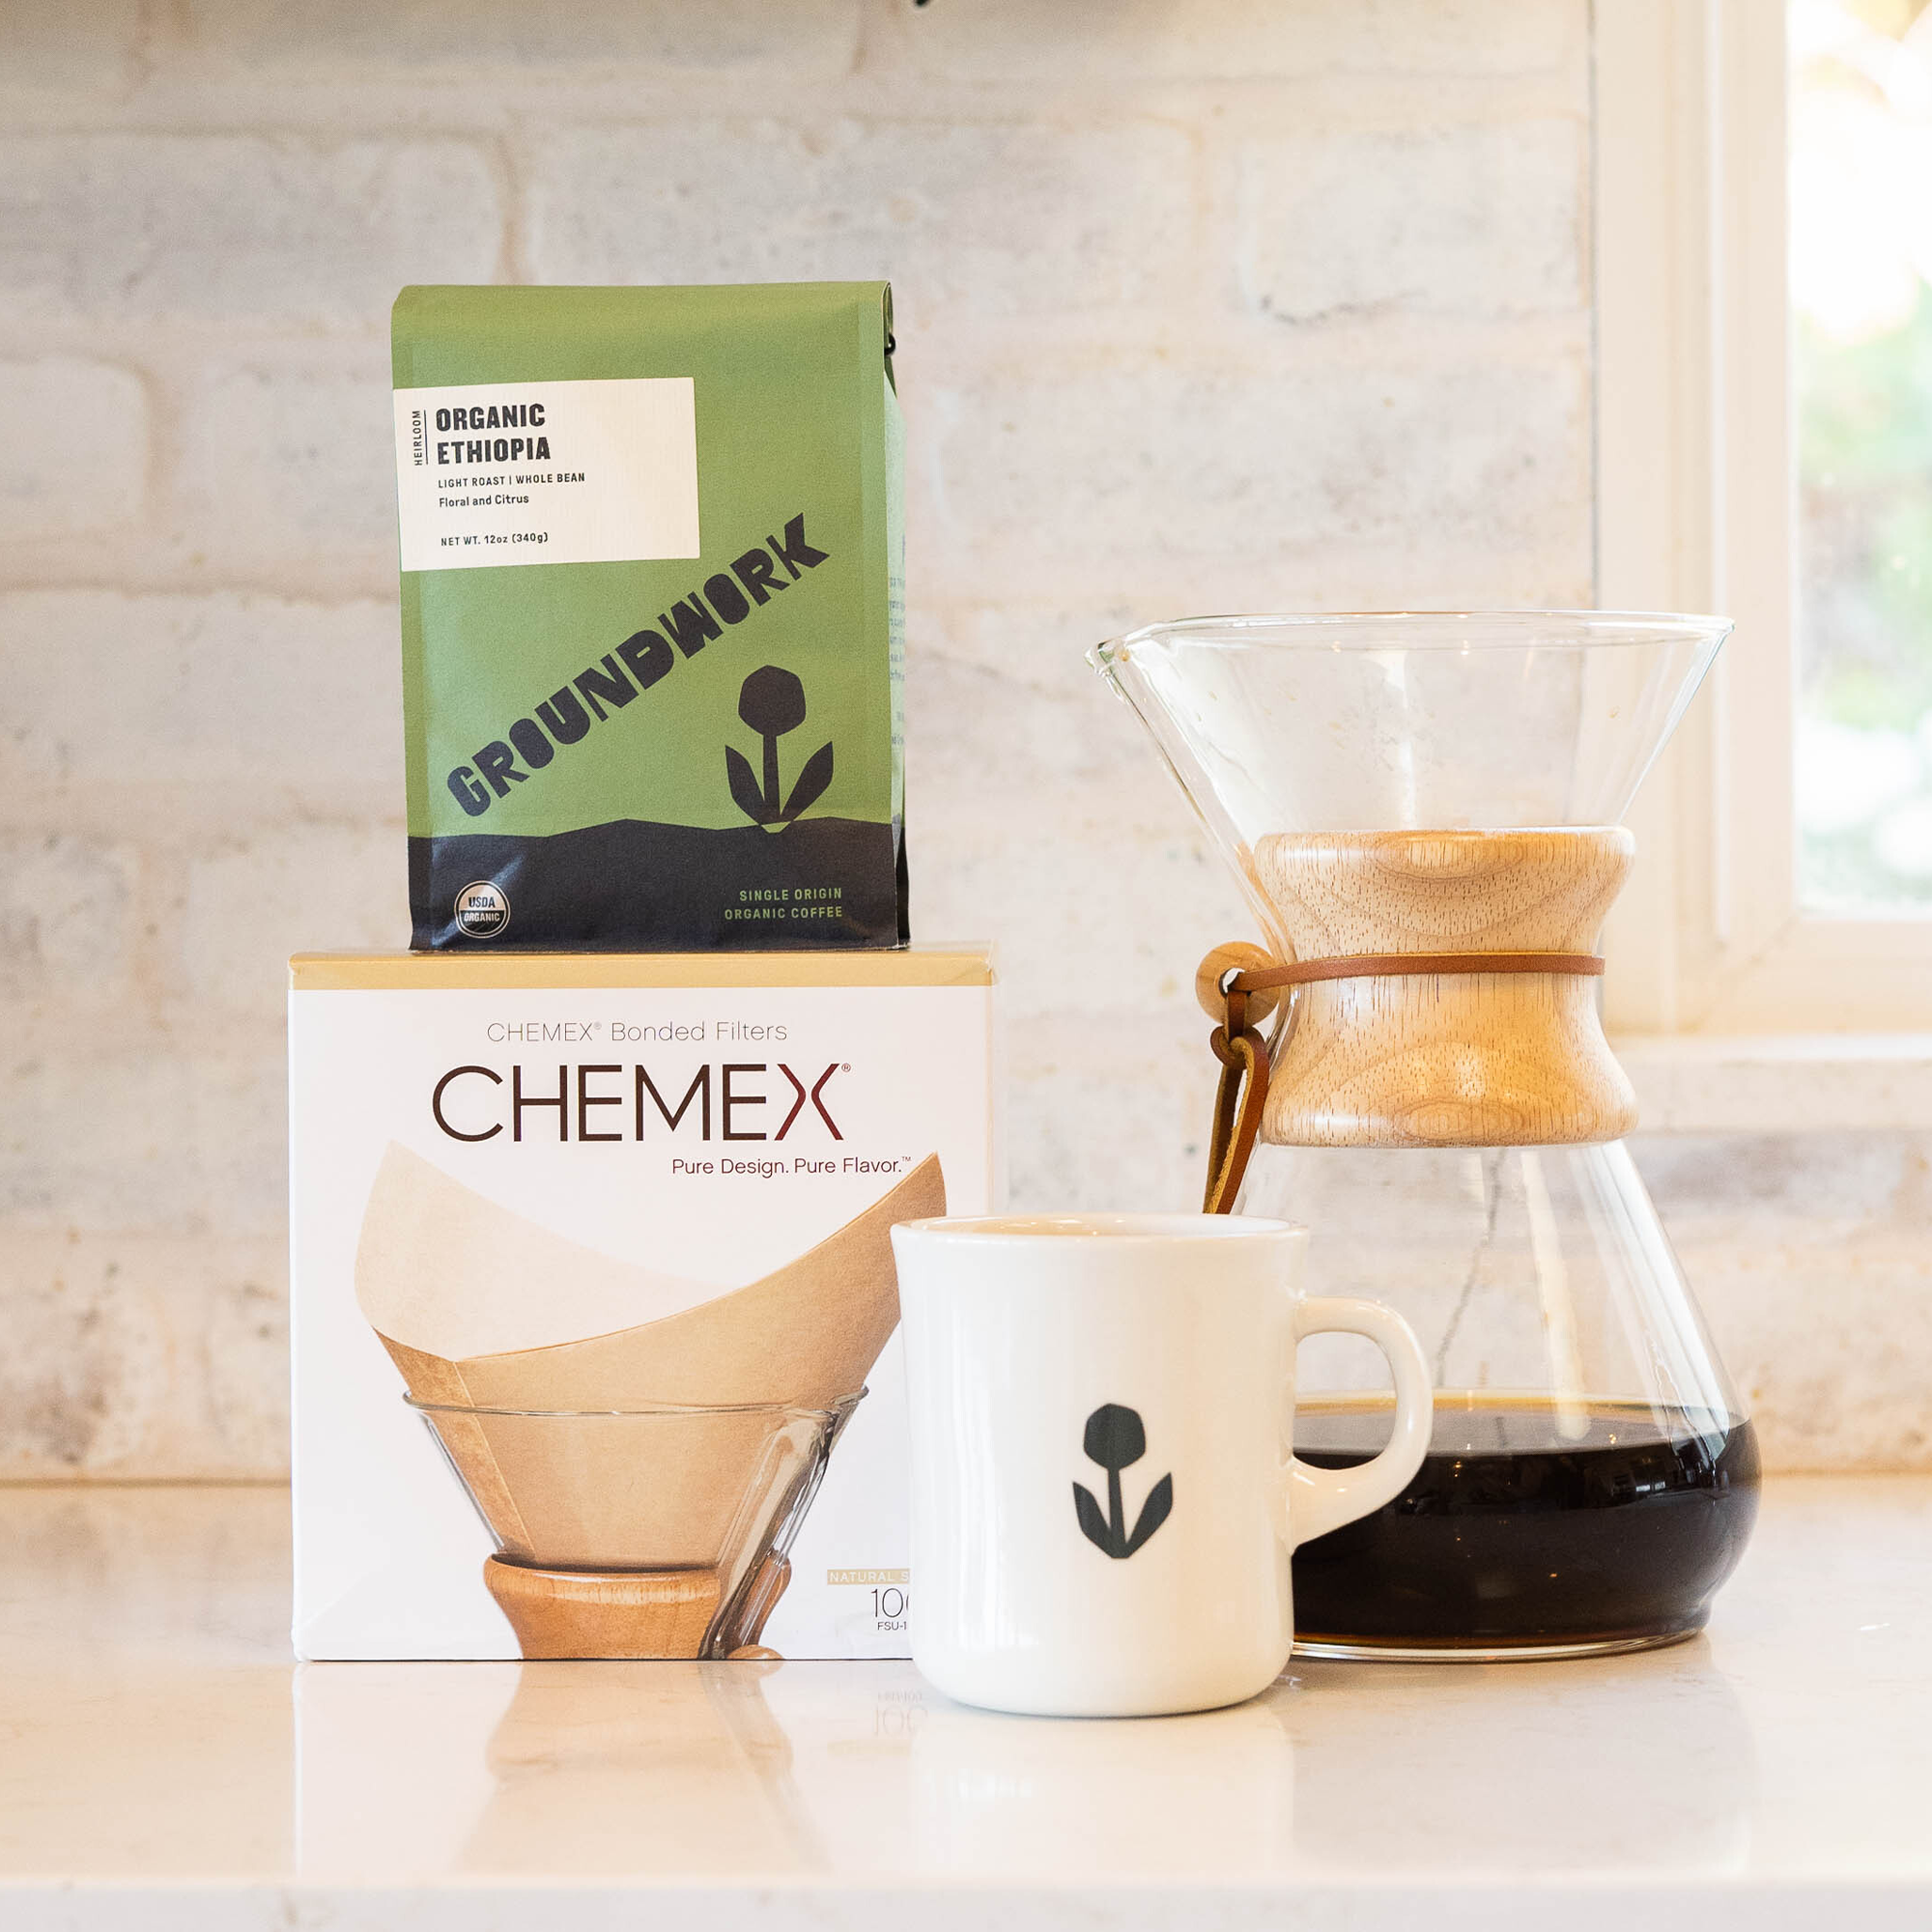 Chemex 6-cup Coffee Brewer